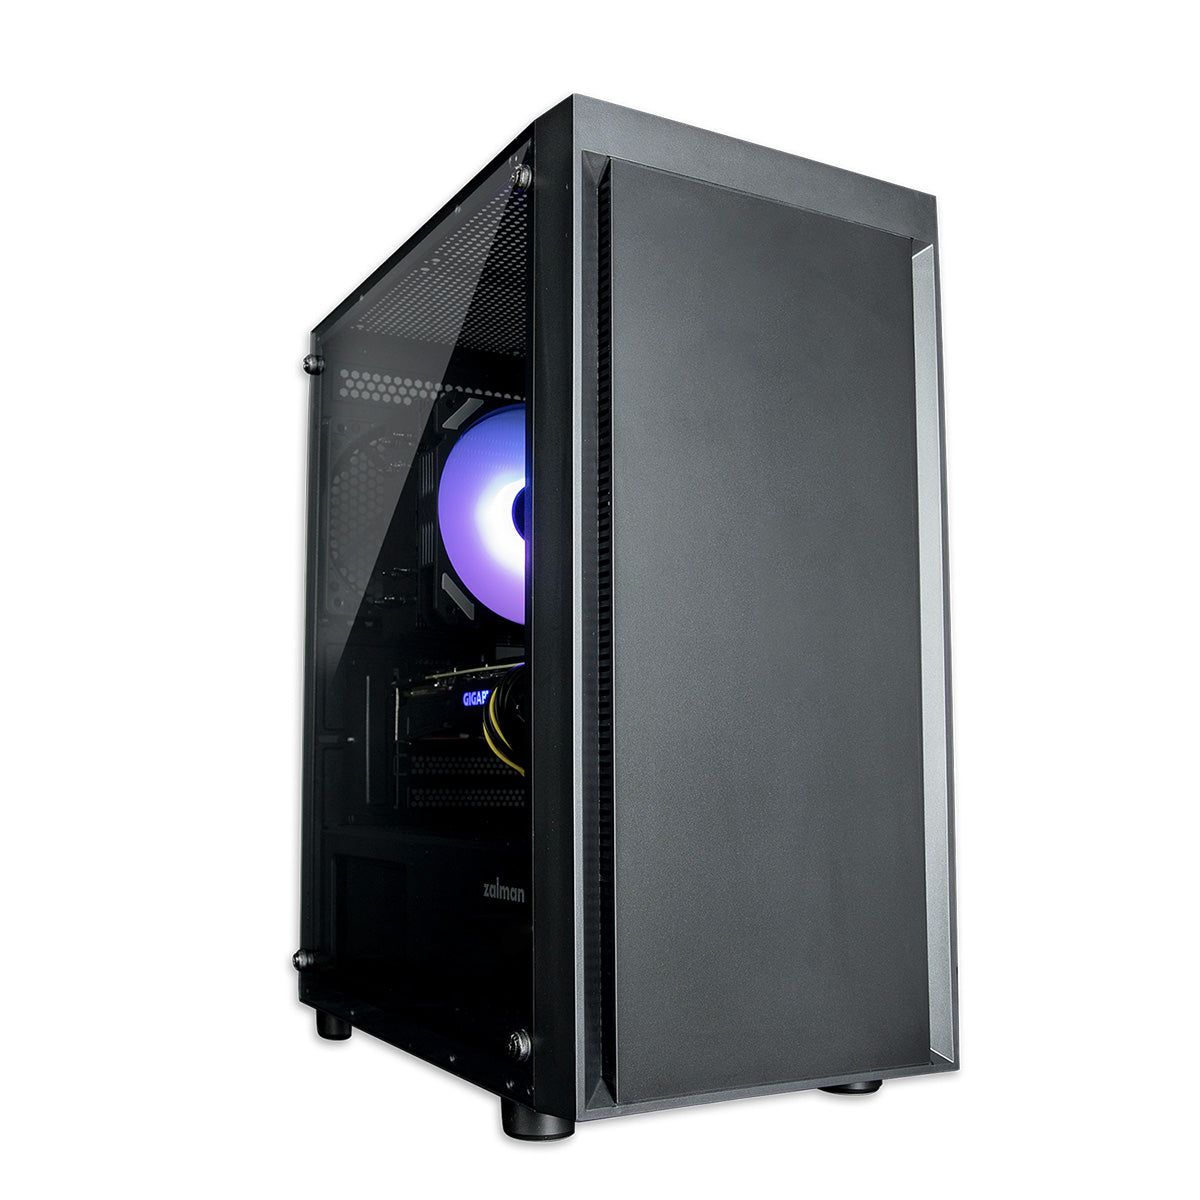 Zalman T3 mATX Mini-Tower PC Case 2 x Fans Pre-installed Compact Chass